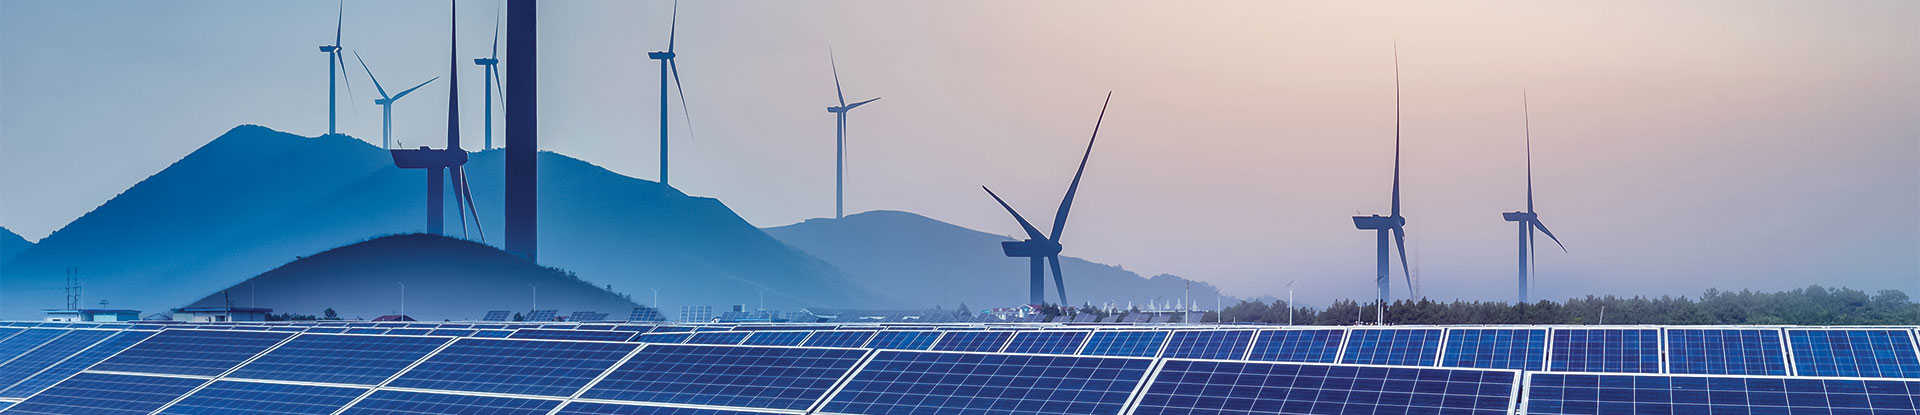 Solar panels and wind power generation equipment